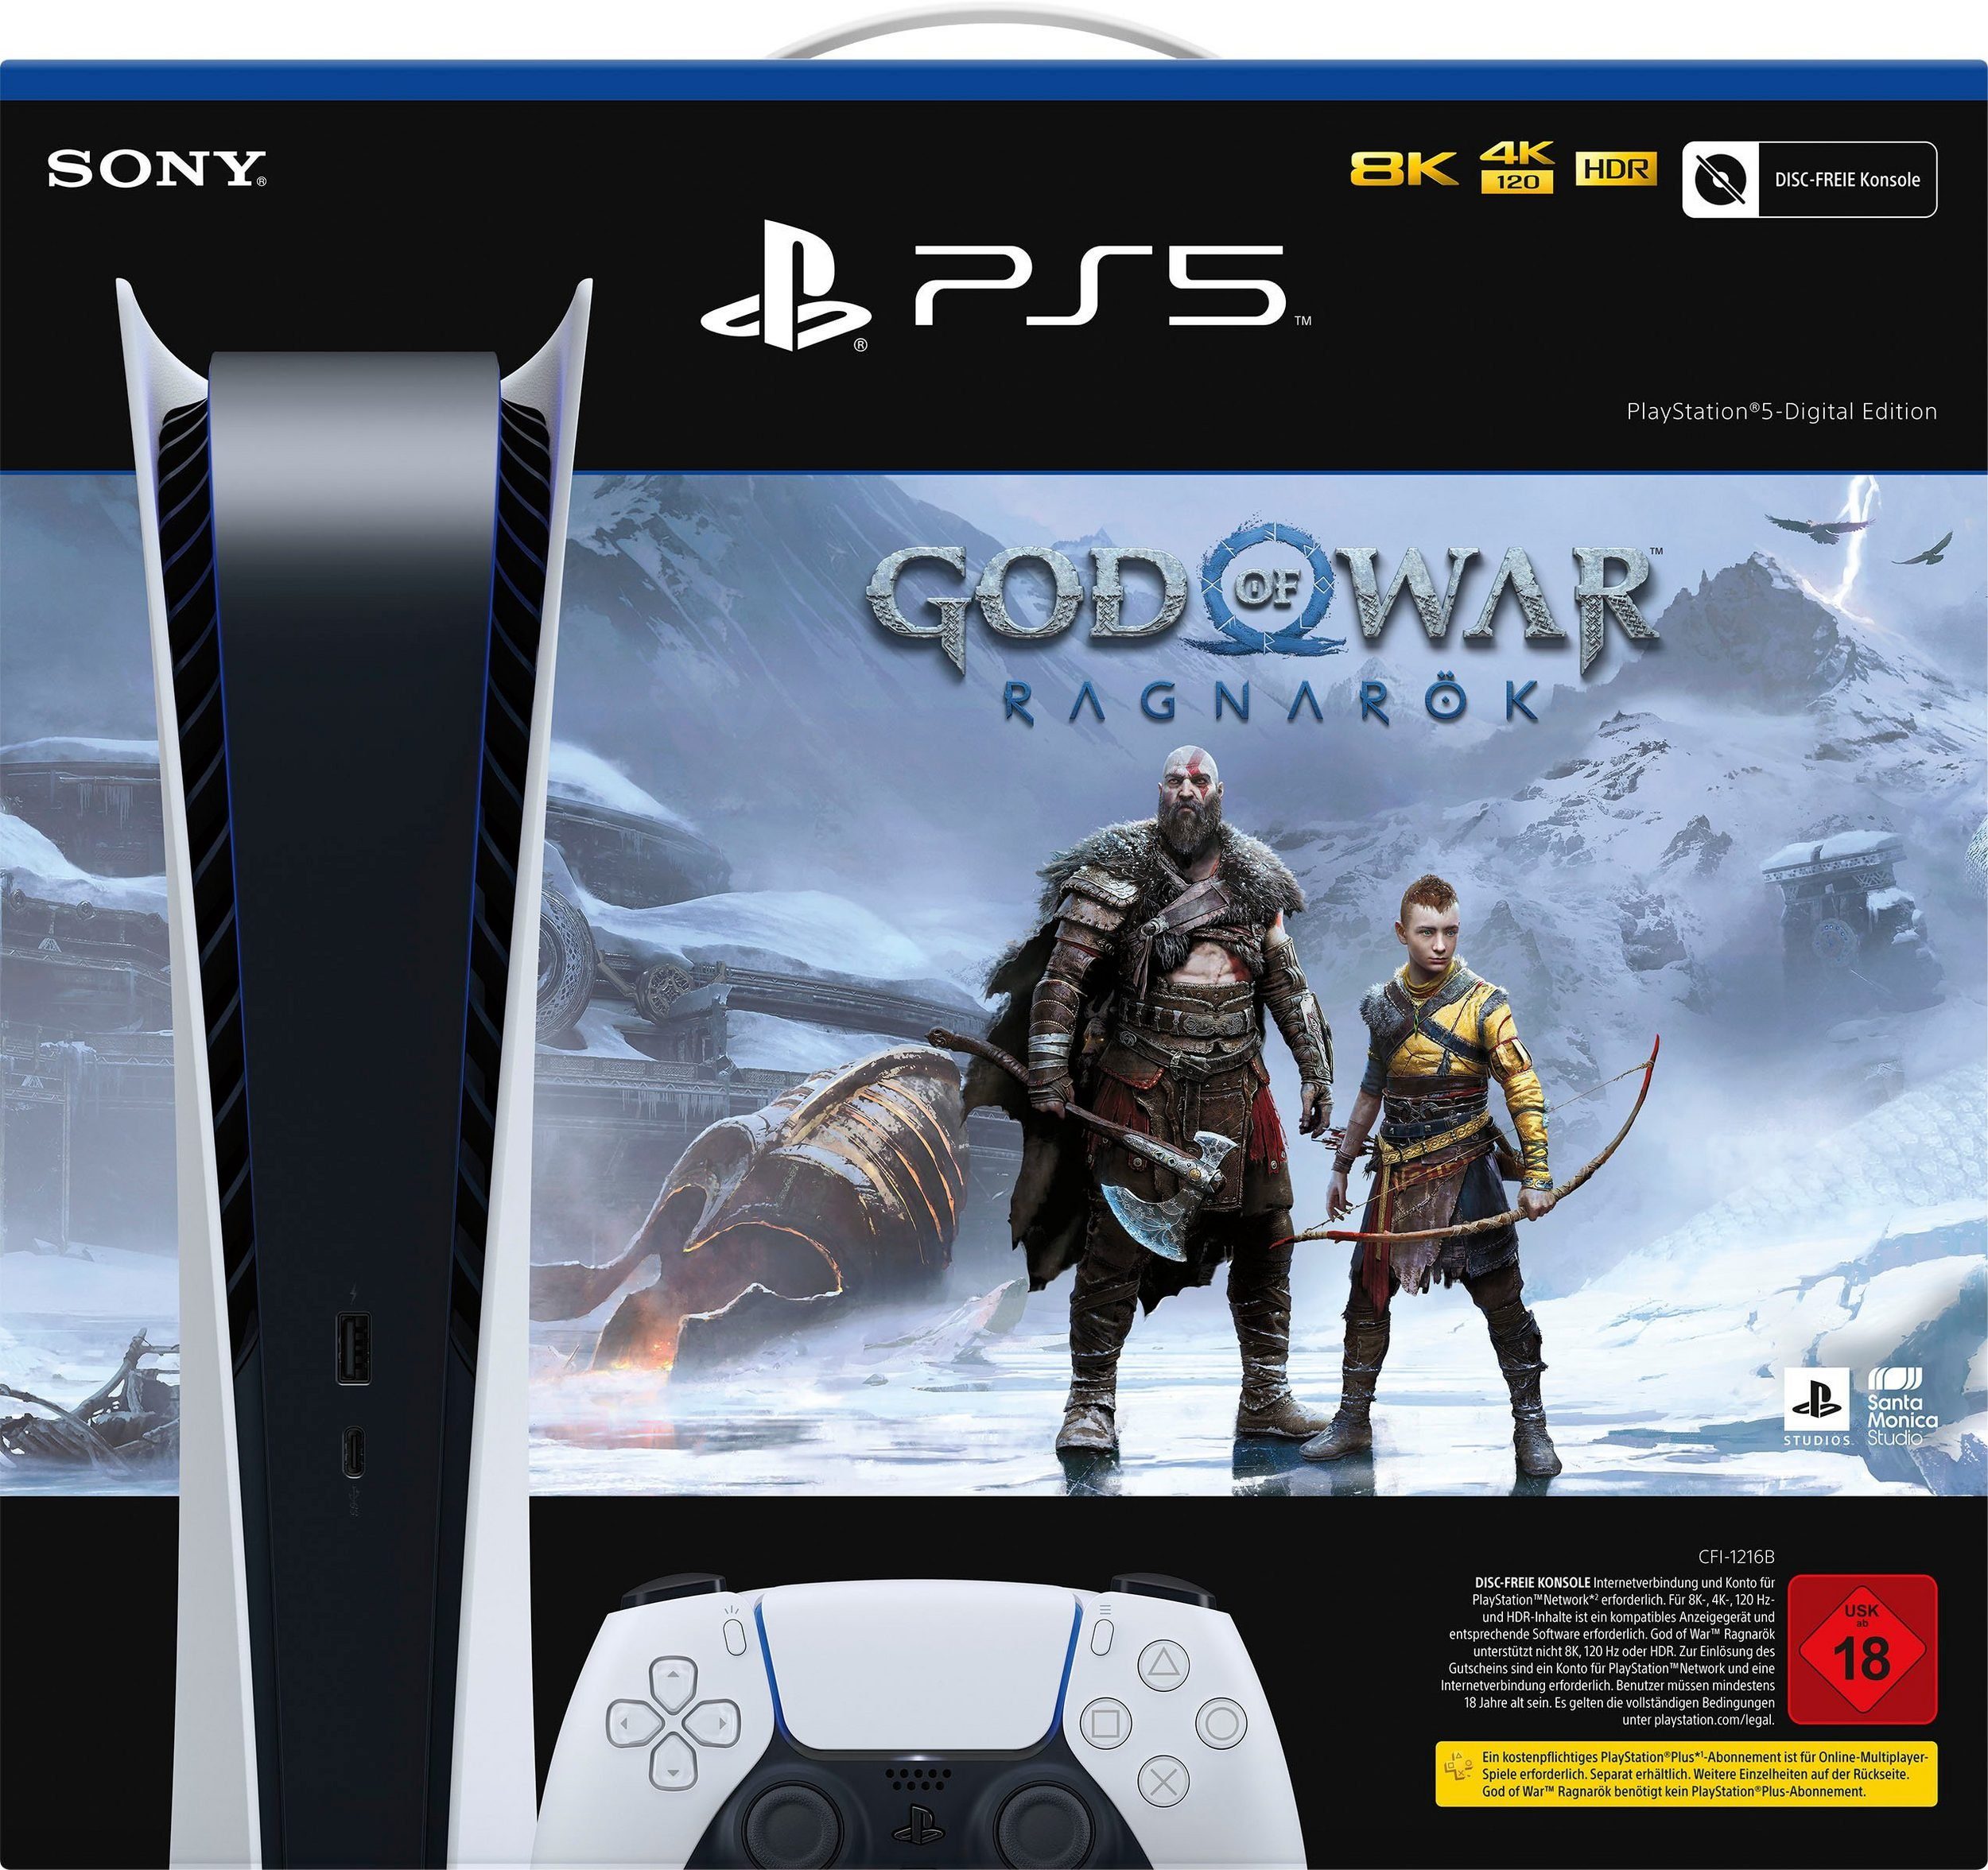 Playstation 5 -Digital Edition, inkl. God of War Ragnarök (Download Code),  PS5 Konsole + 1 Controller + 825 GB SSD